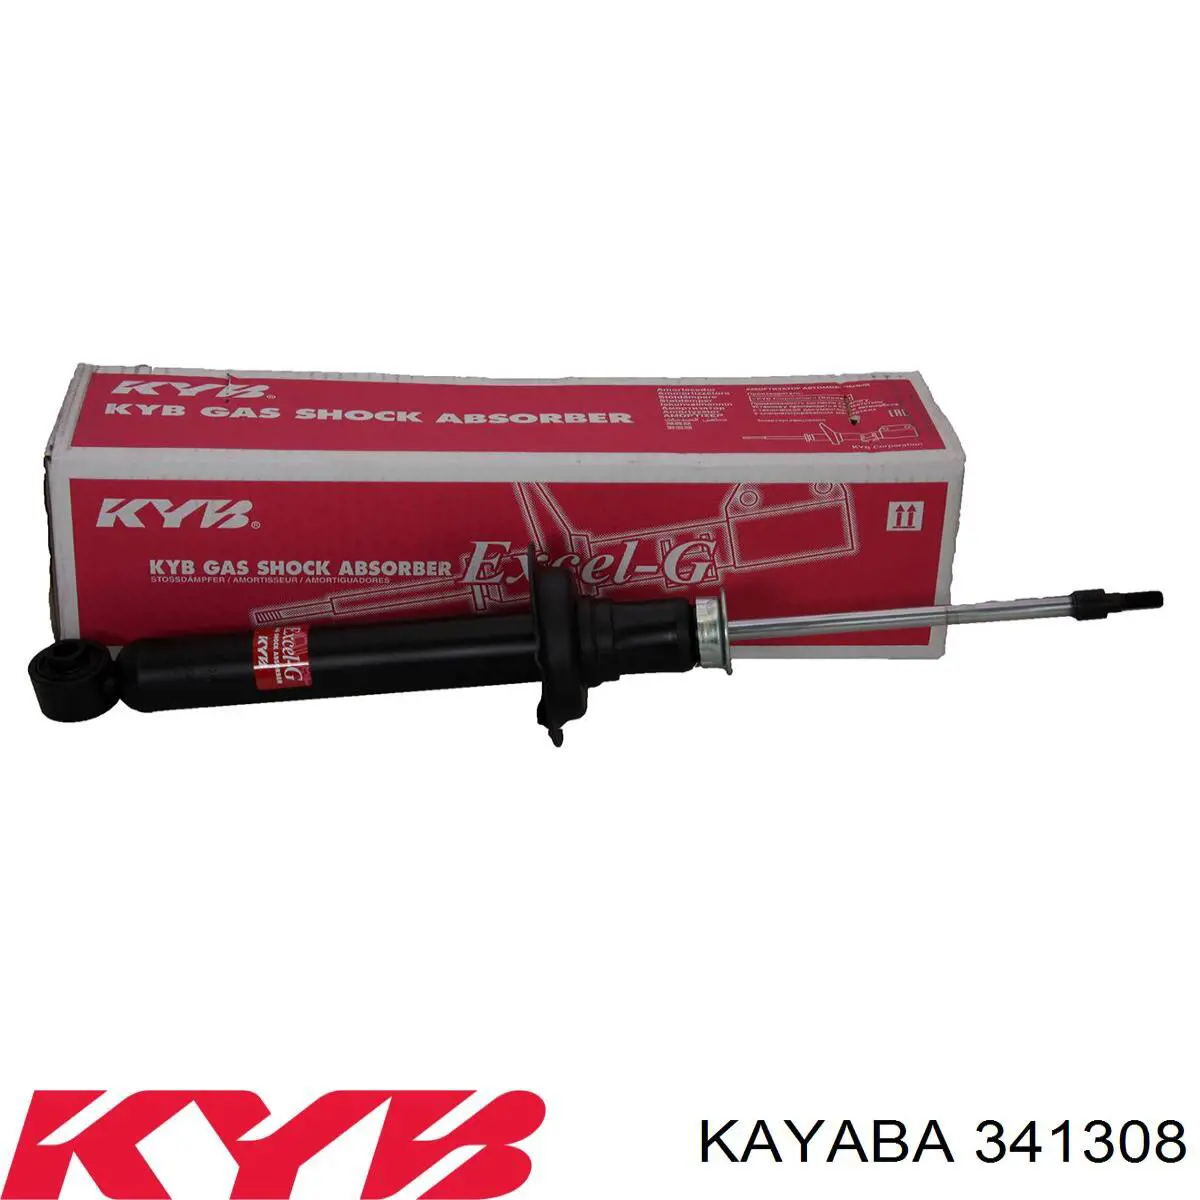 341308 Kayaba